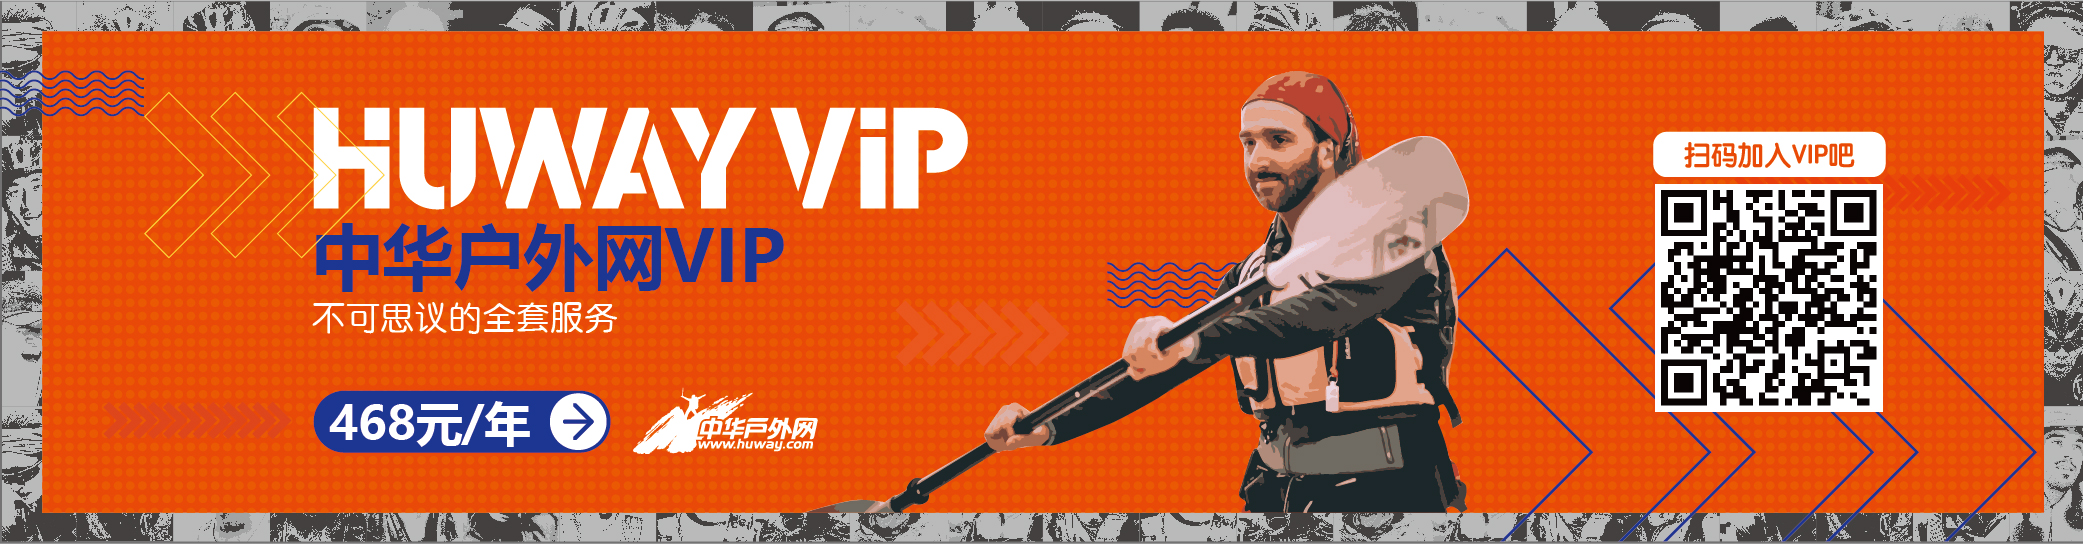 VIP-banner-02.jpg